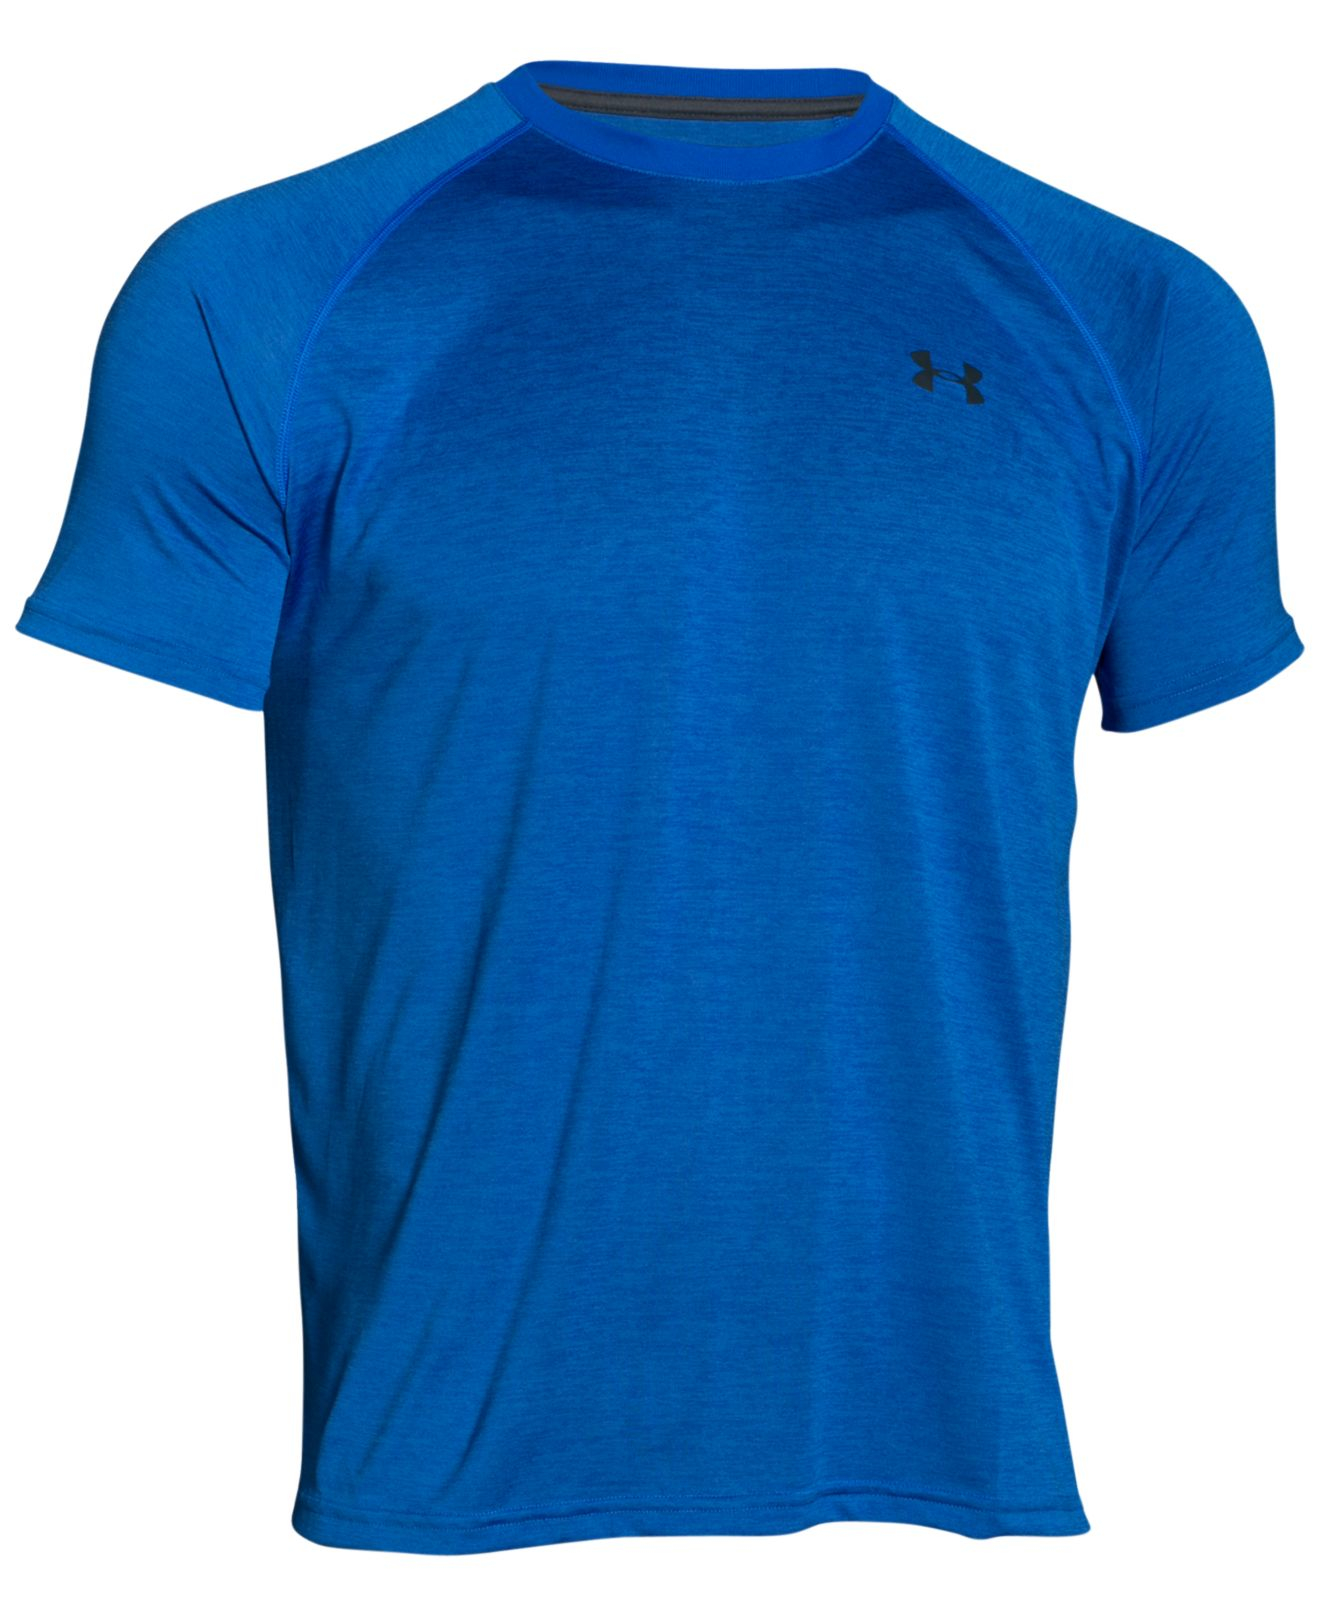 Lyst - Under Armour Men's Tech T-shirt in Blue for Men